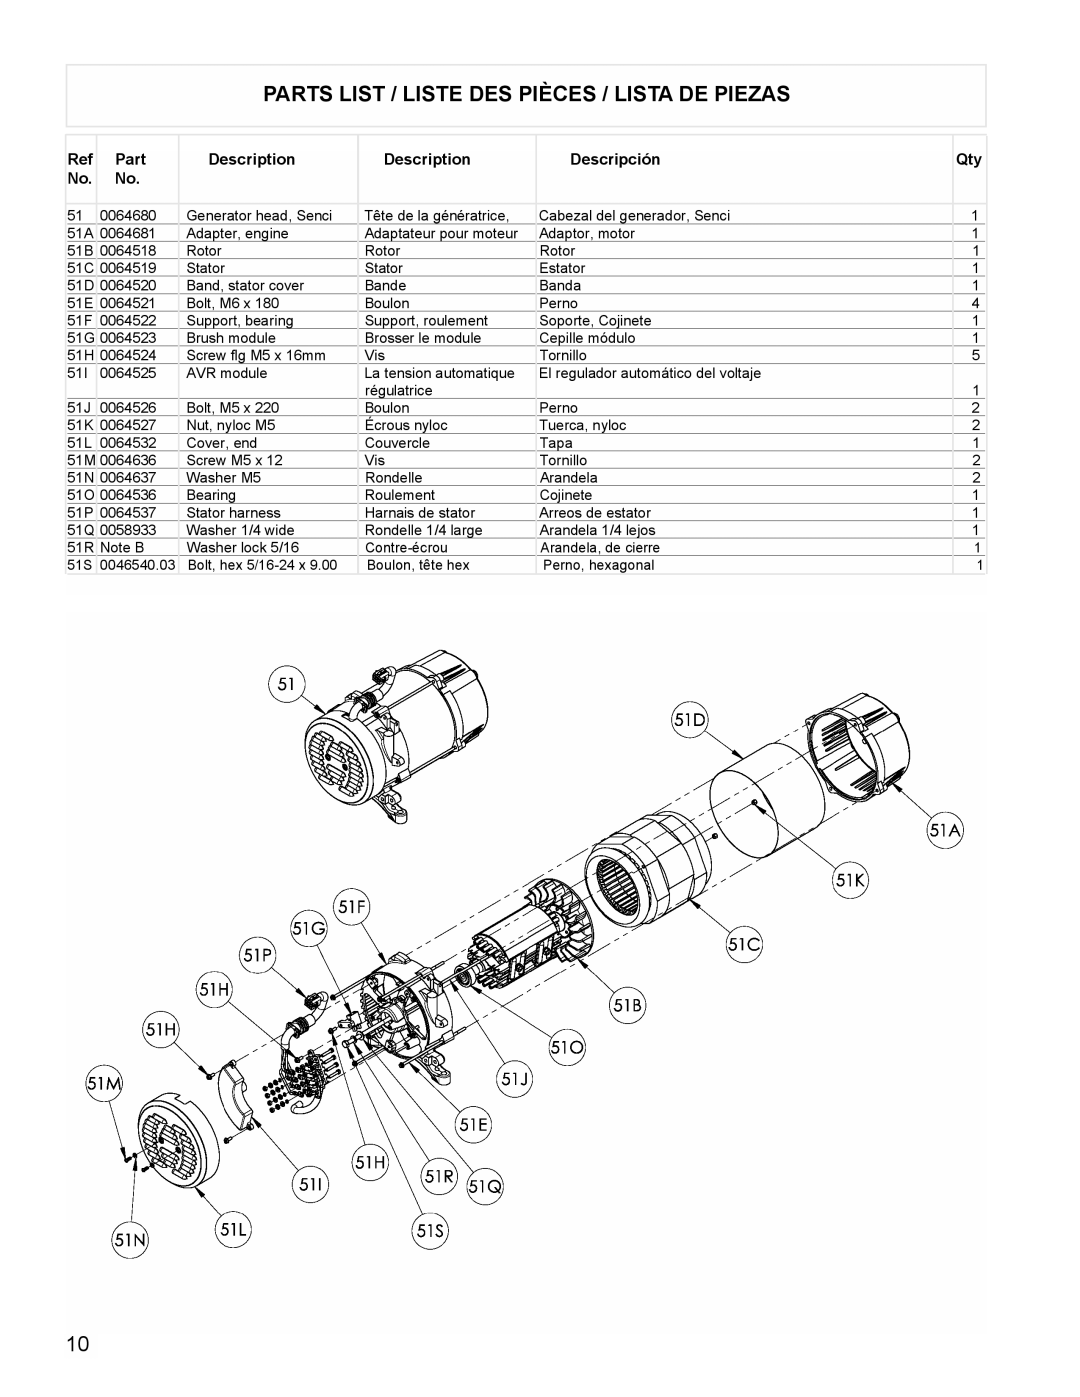 Coleman PM0435005 manual Parts List / Liste Des Pièces / Lista De Piezas, Description, Descripción 